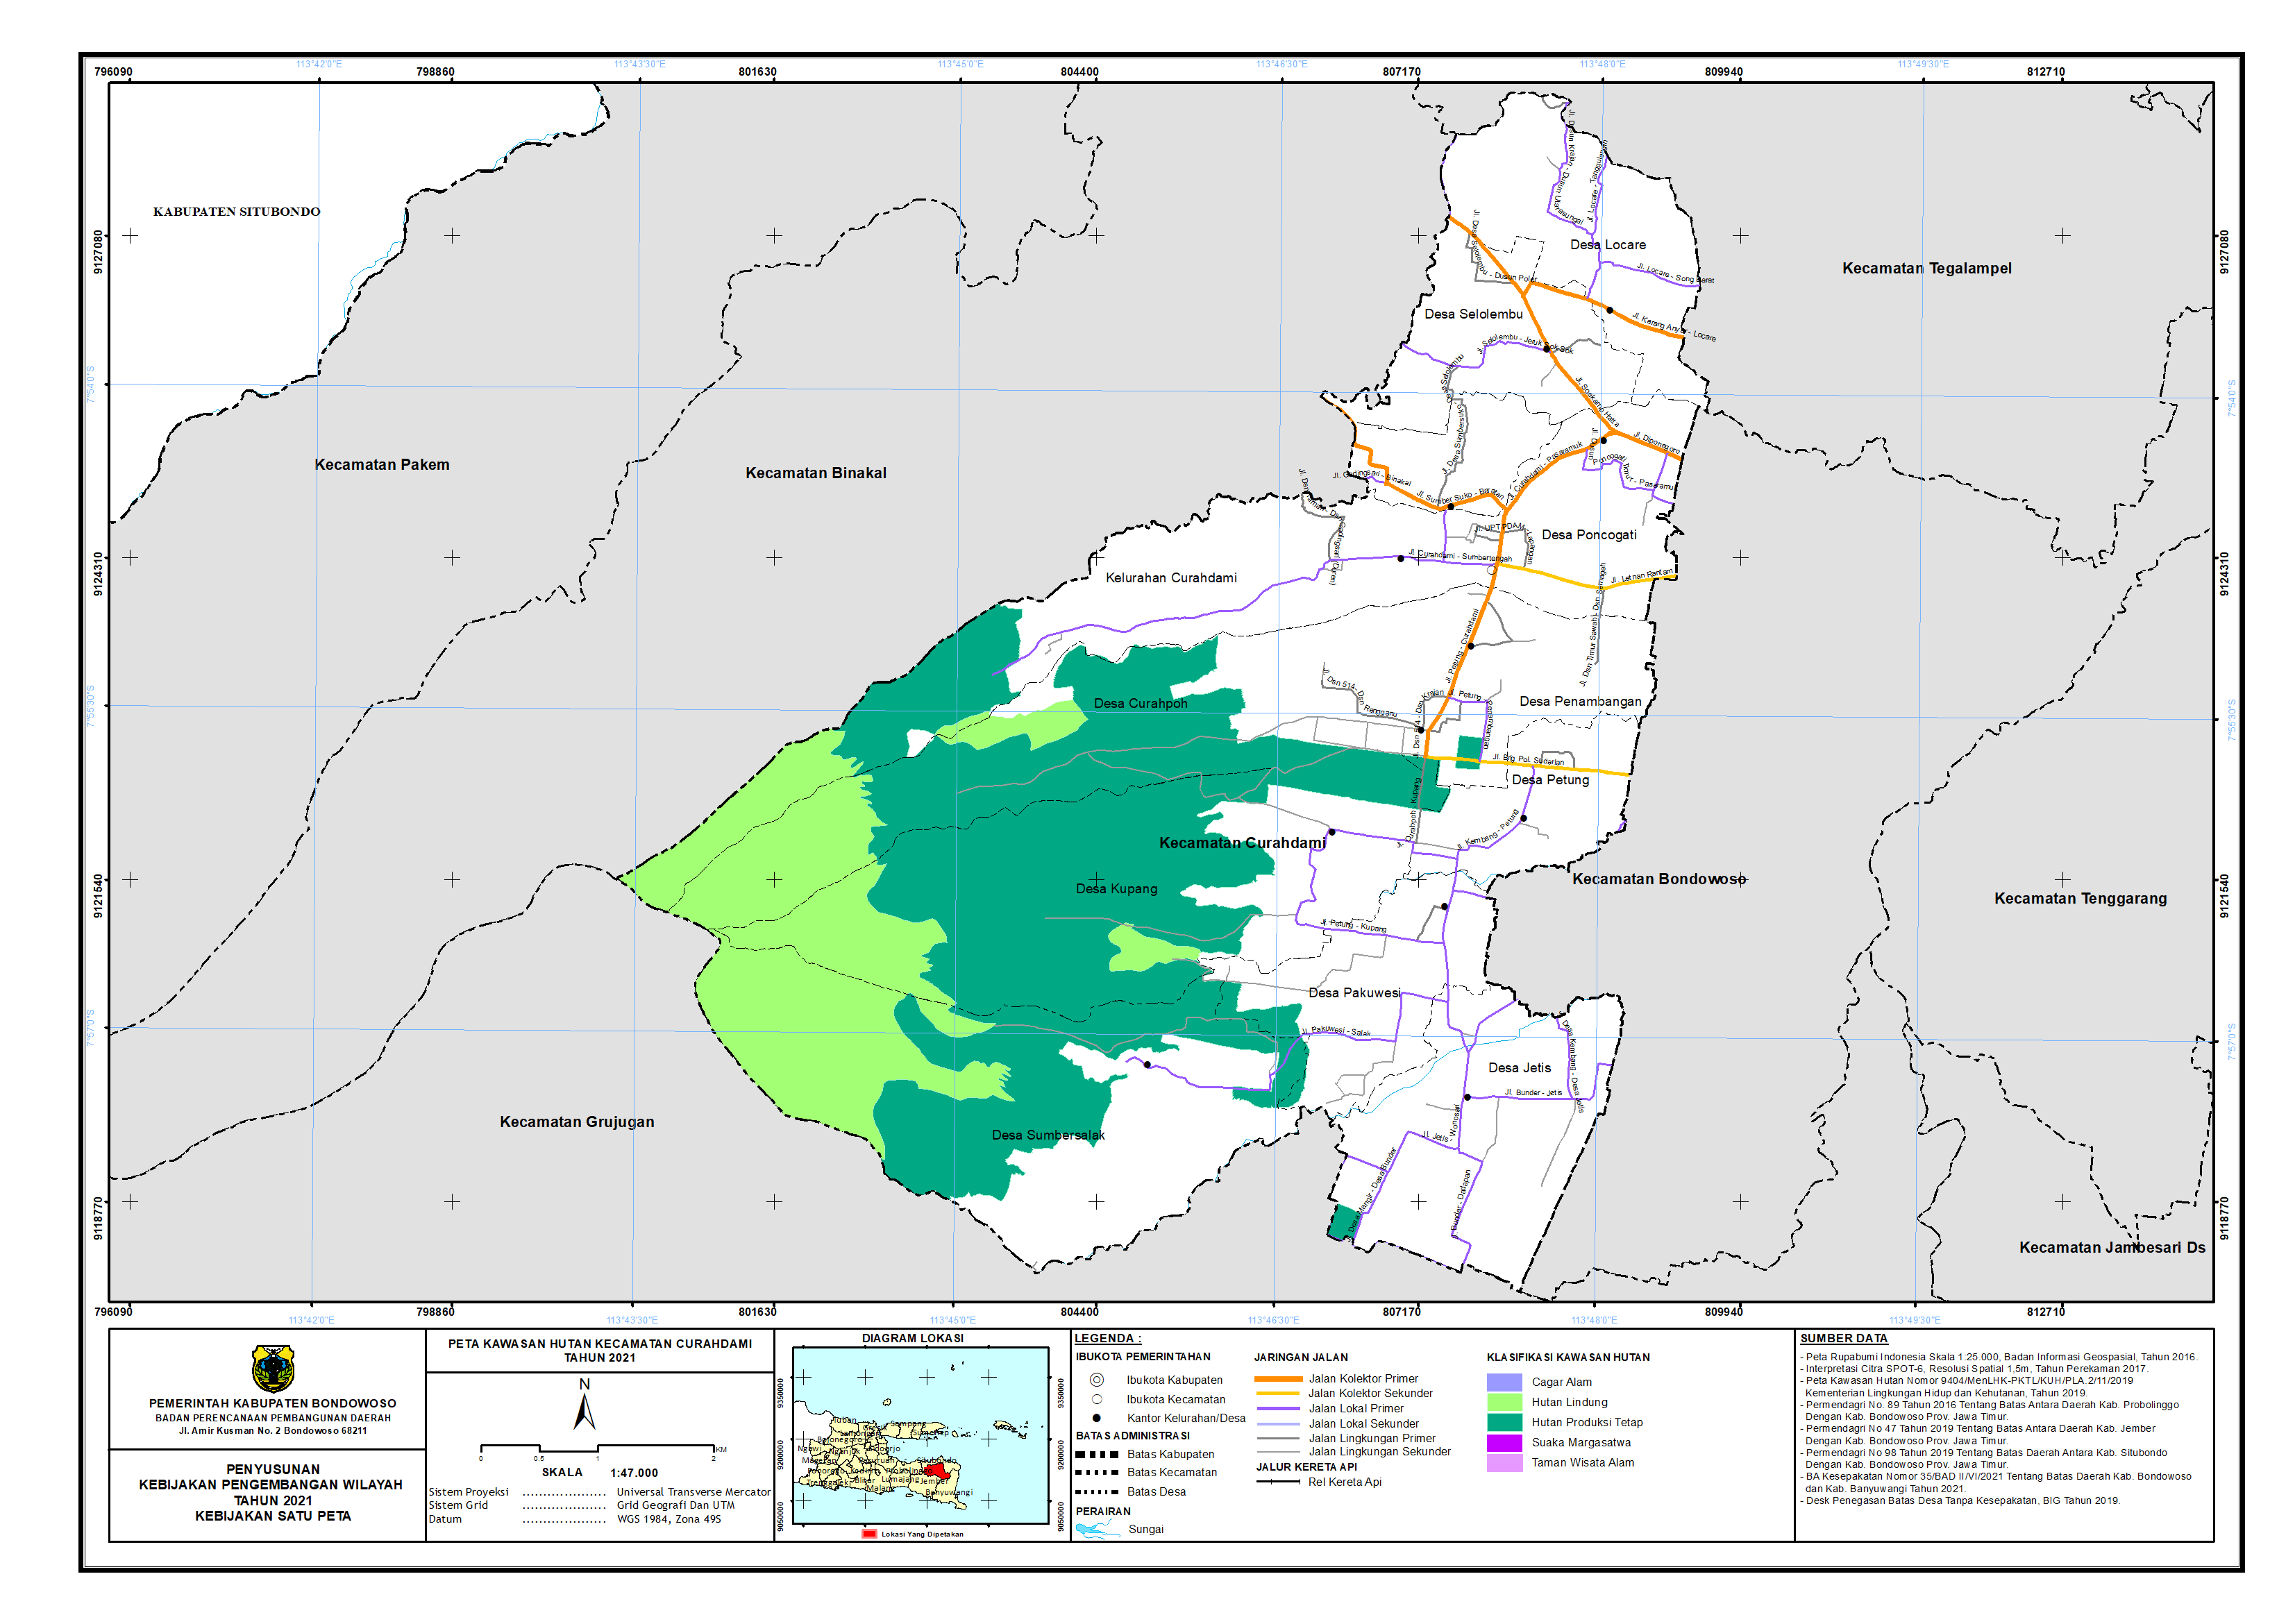 Peta Kawasan Hutan Kecamatan Curahdami.png